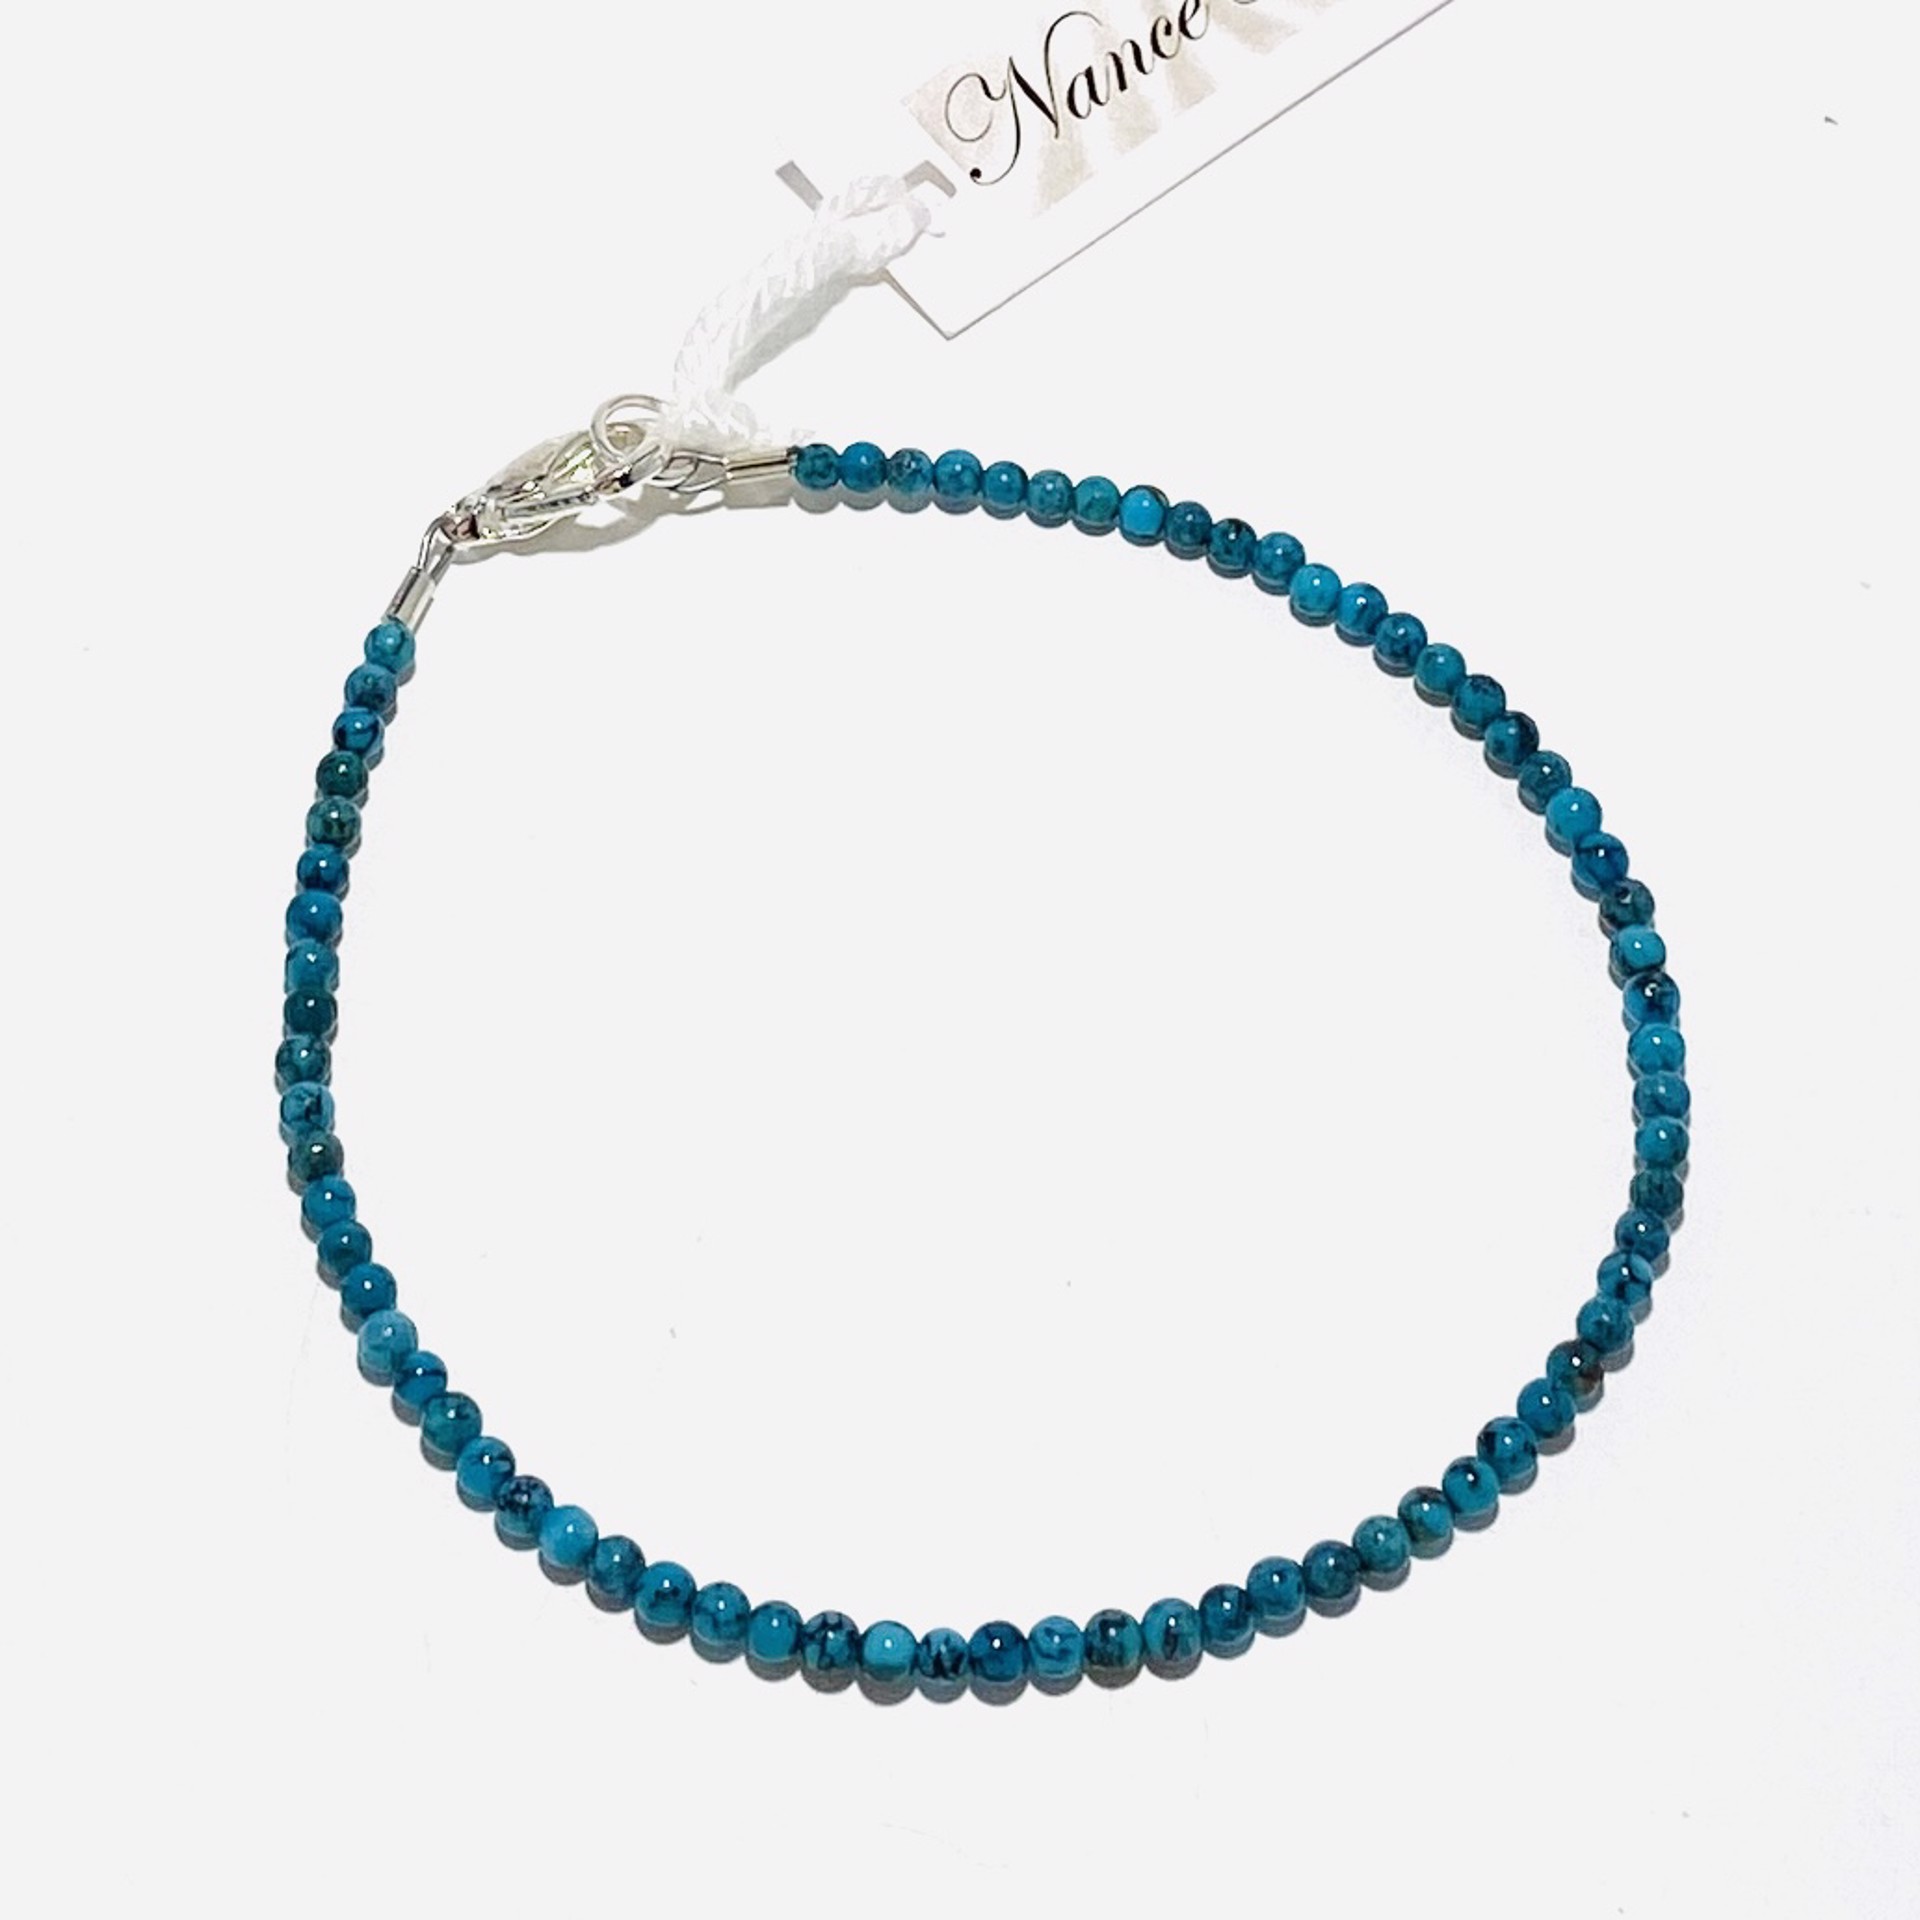 NT23-8 Turquoise Bead Bracelet by Nance Trueworthy